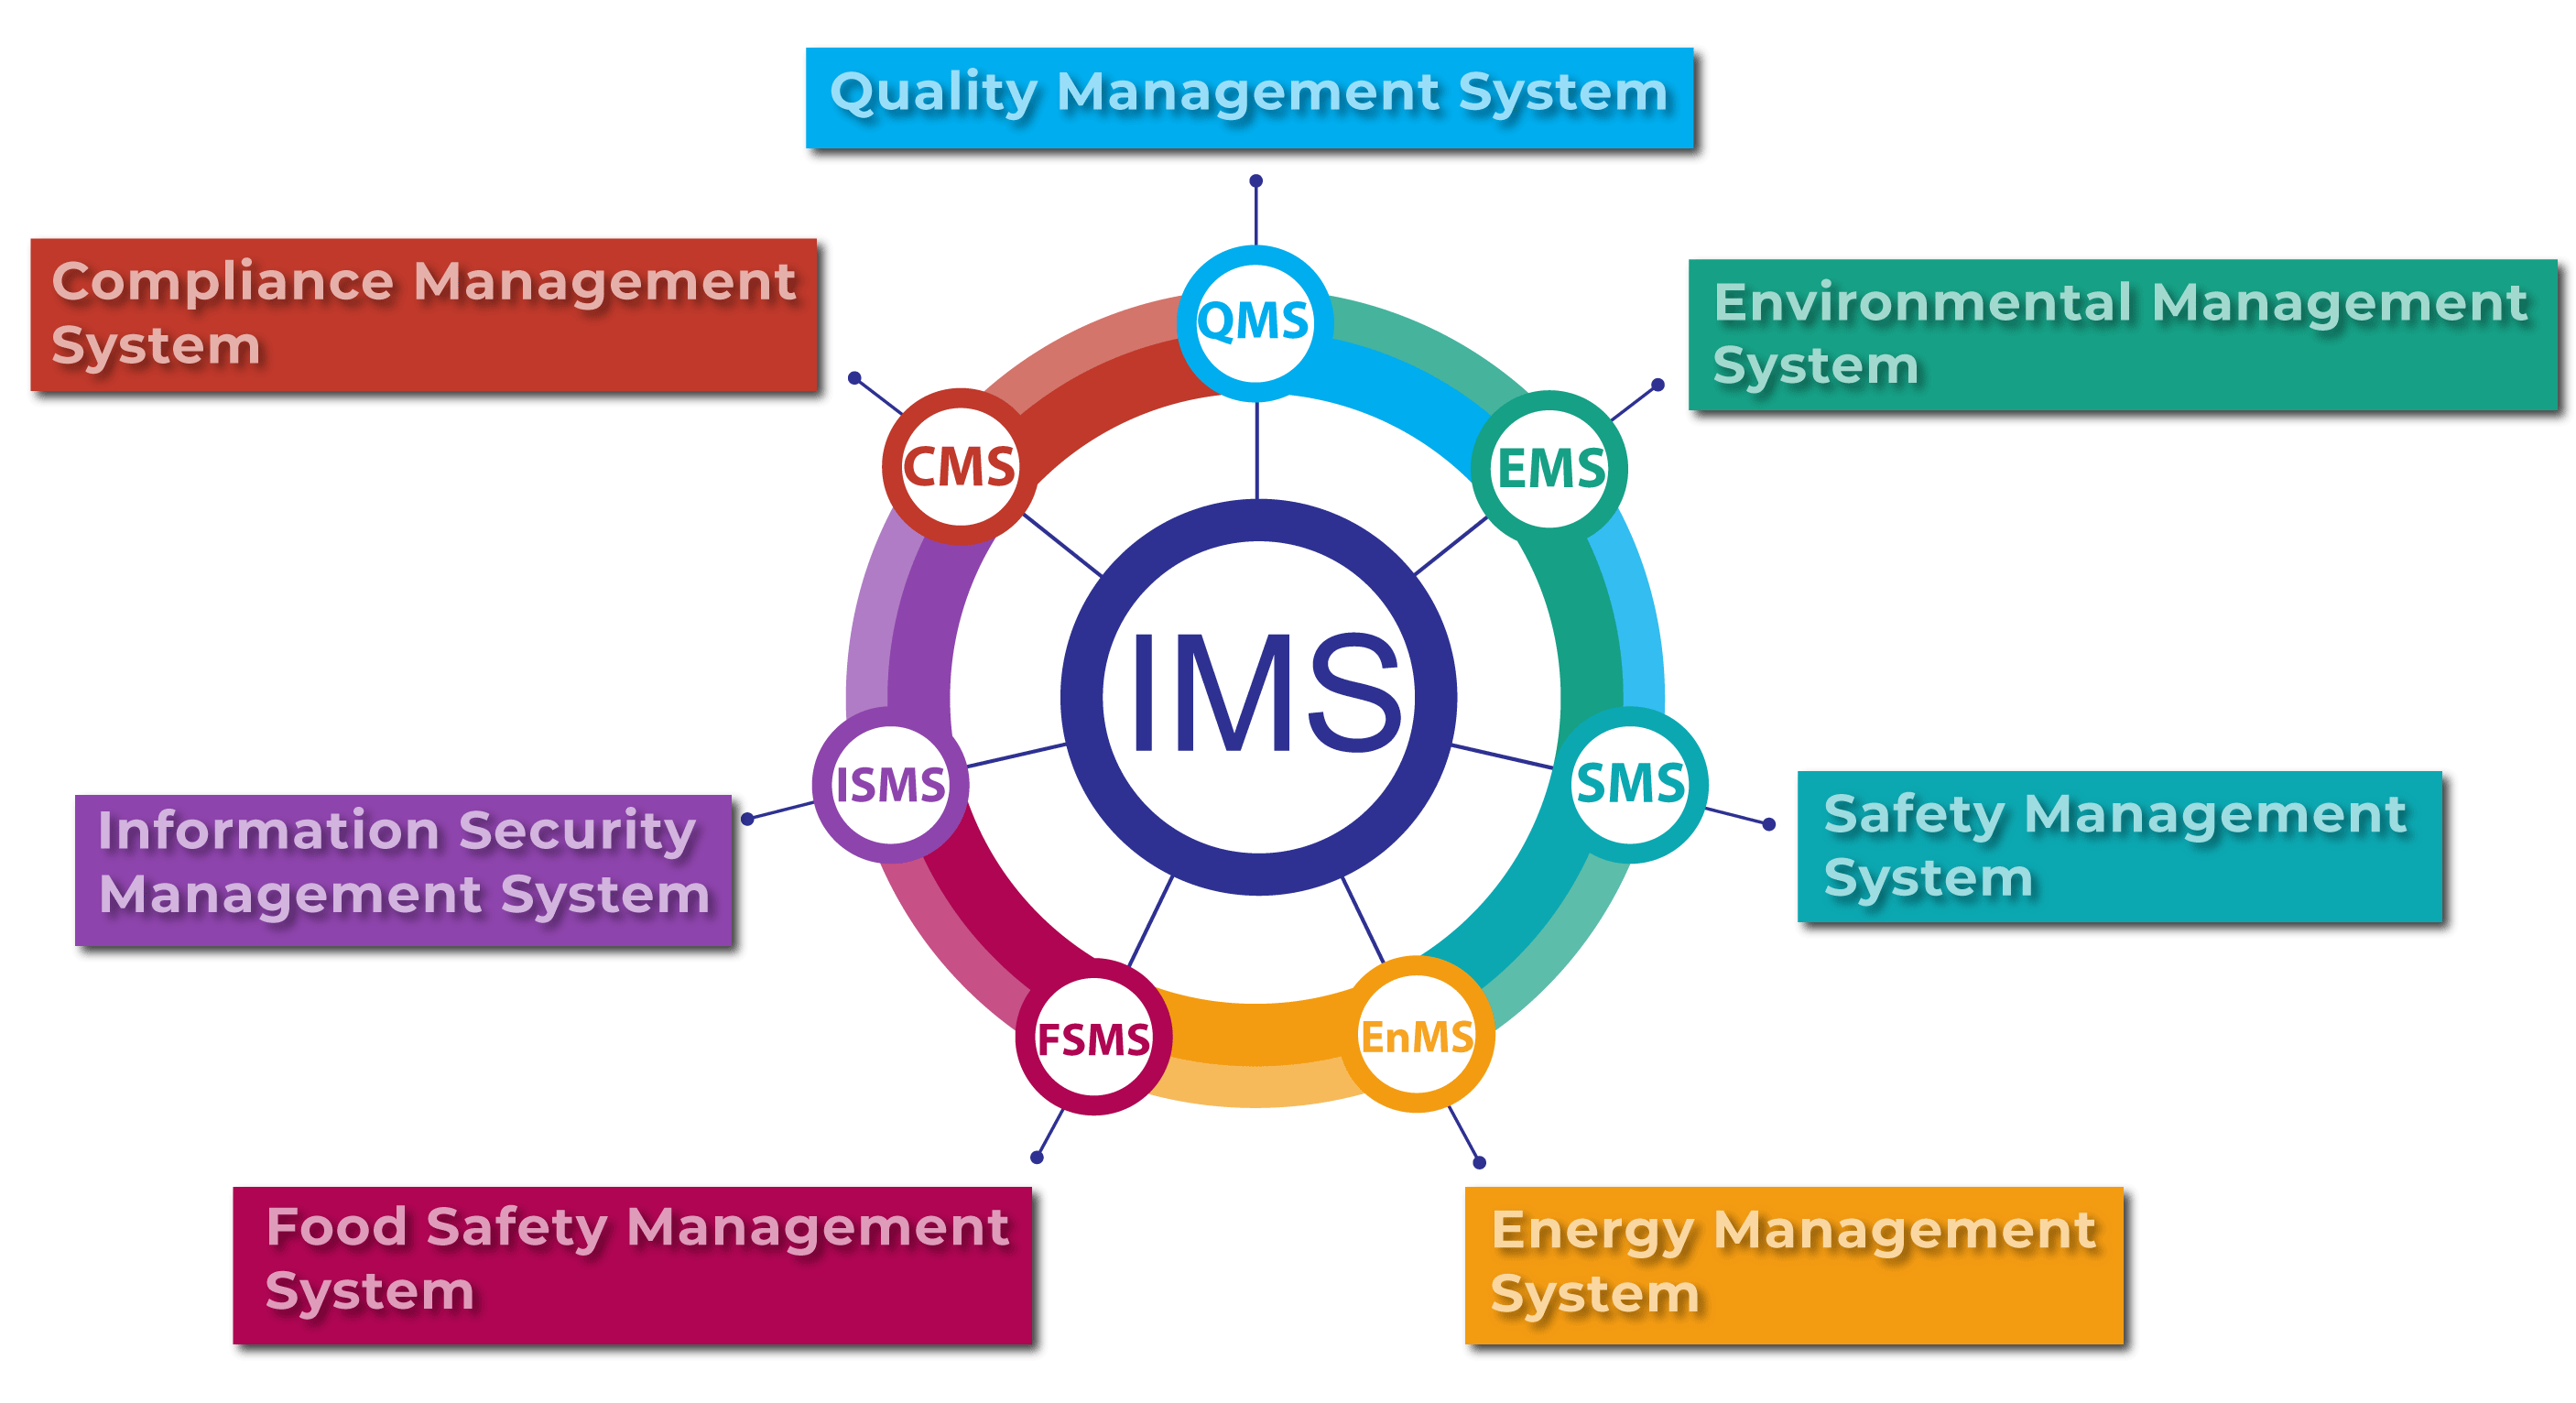 presentation on integrated management system